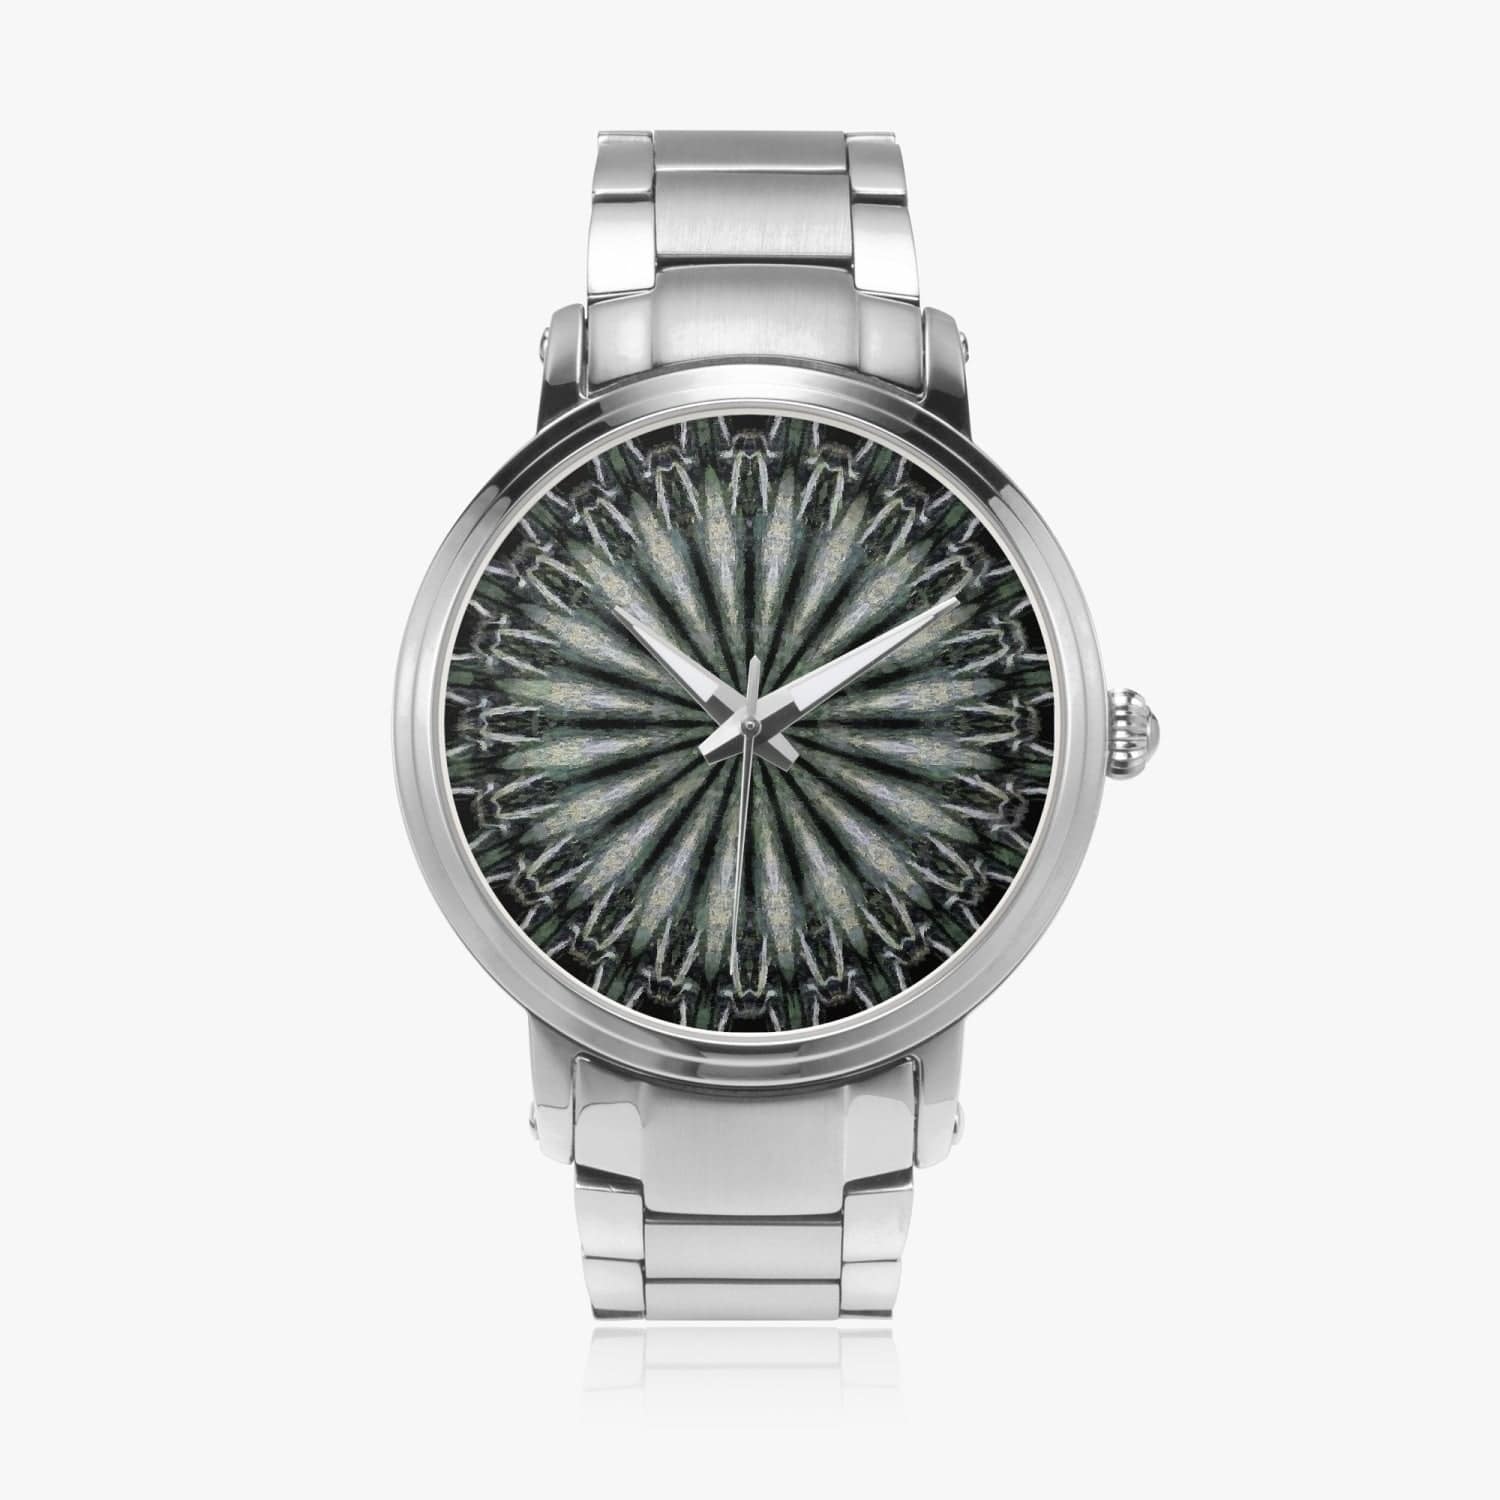 Ornamental Steel Strap Automatic Watch by Sensus Studio